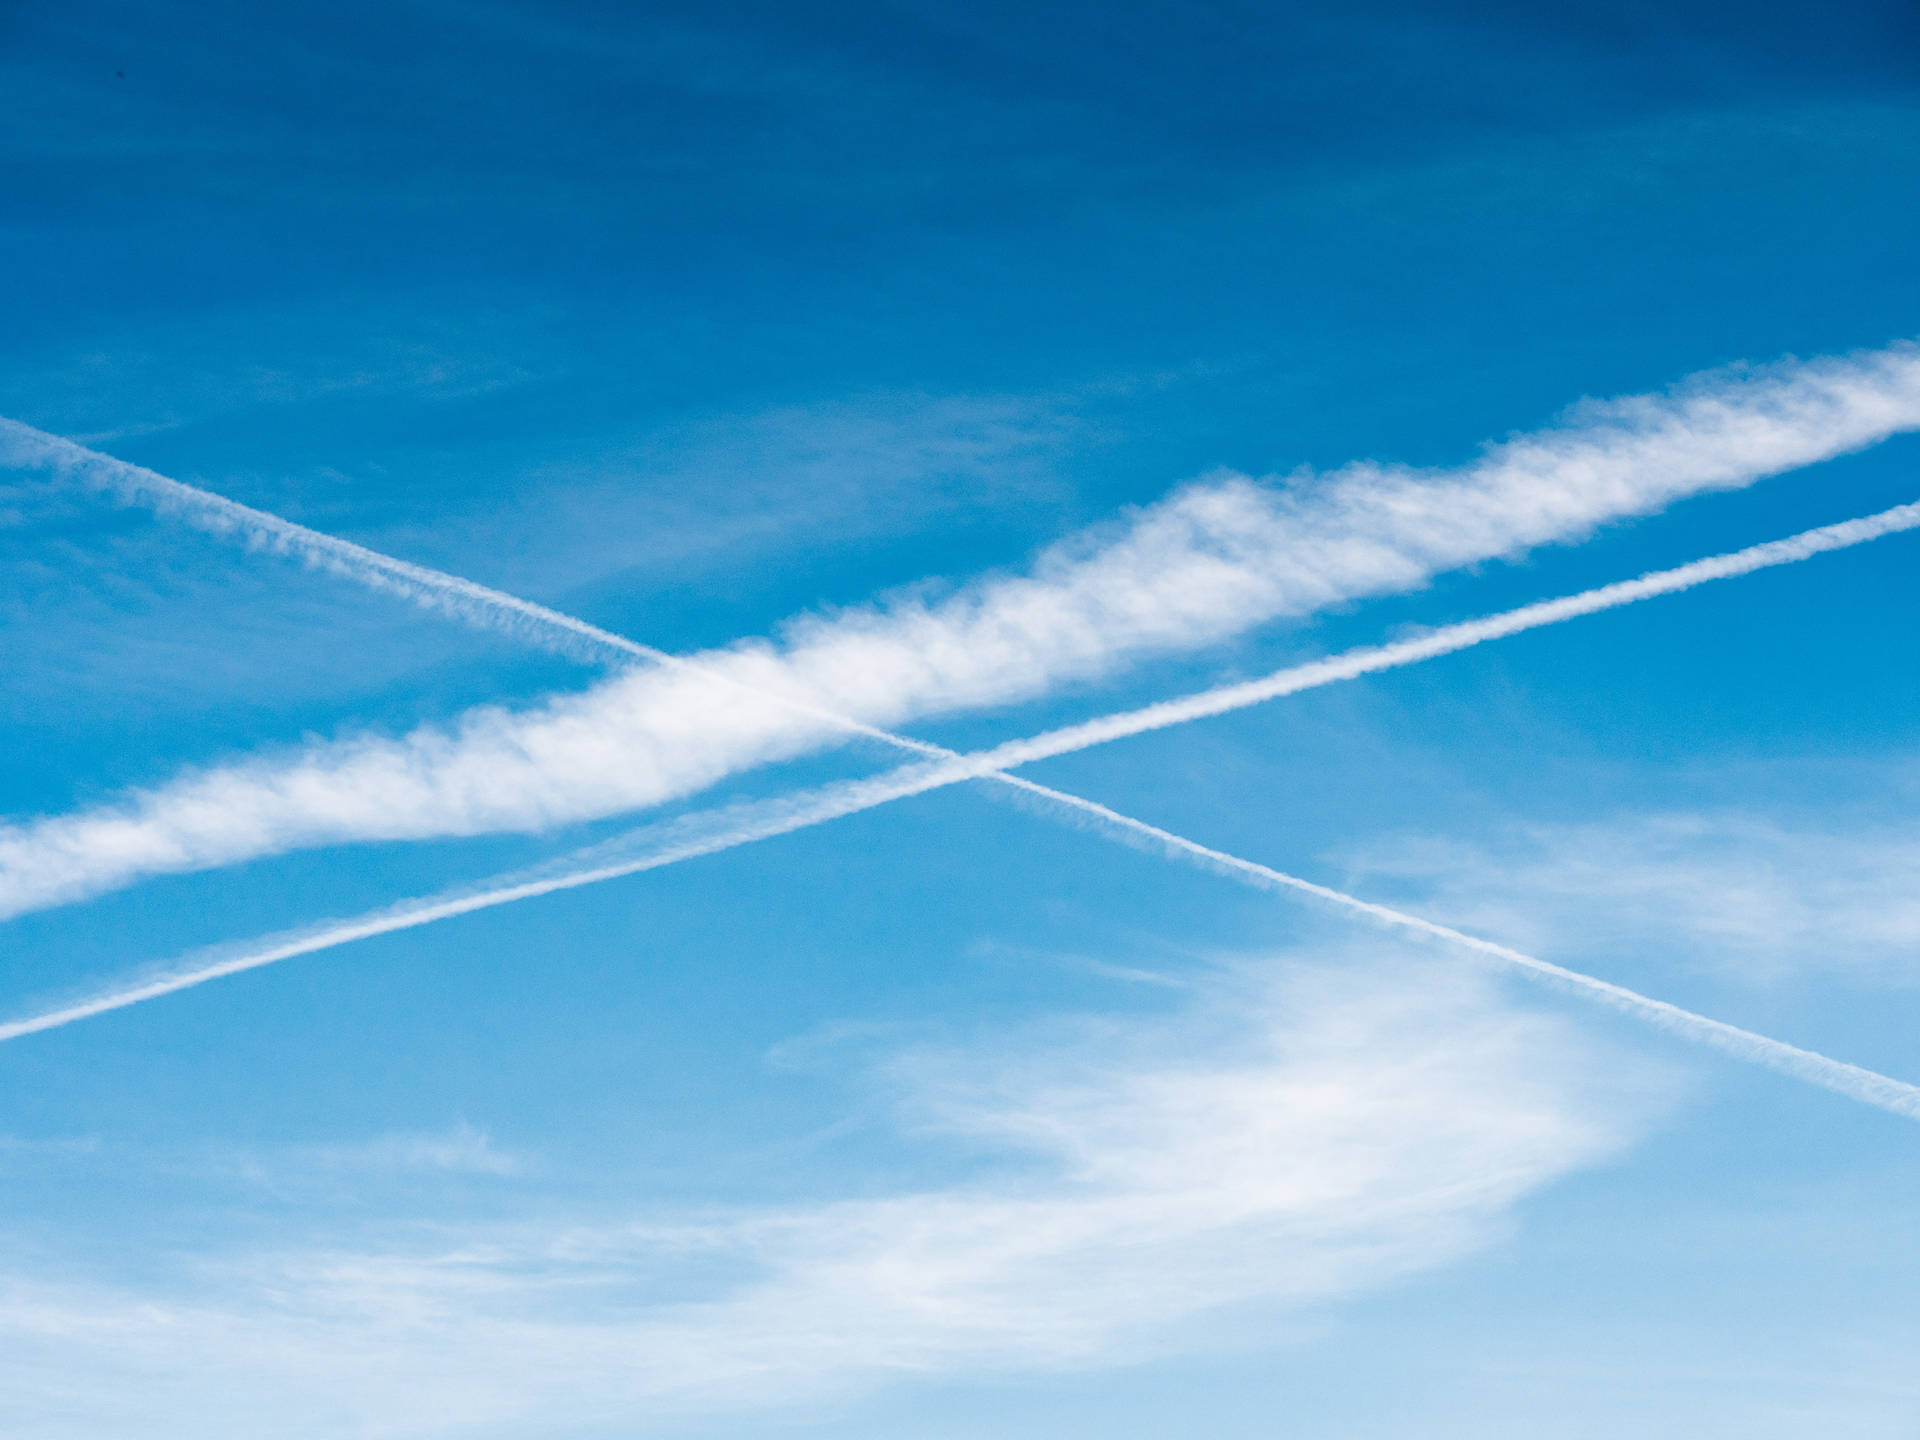 Plane Contrails In Azure Sky